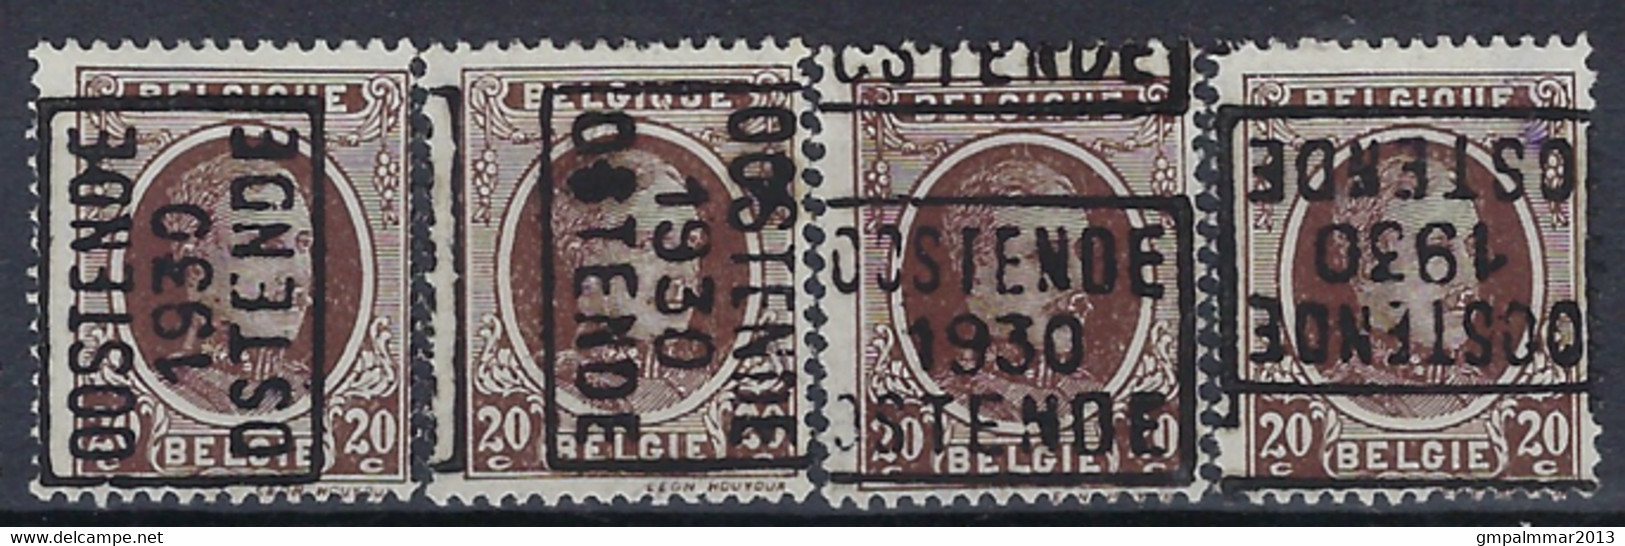 Houyoux Nr. 196 Voorafgestempeld Nr. 5514 A + B + C + D OOSTENDE 1930 OSTENDE ; Staat Zie Scan ! - Rollenmarken 1930-..